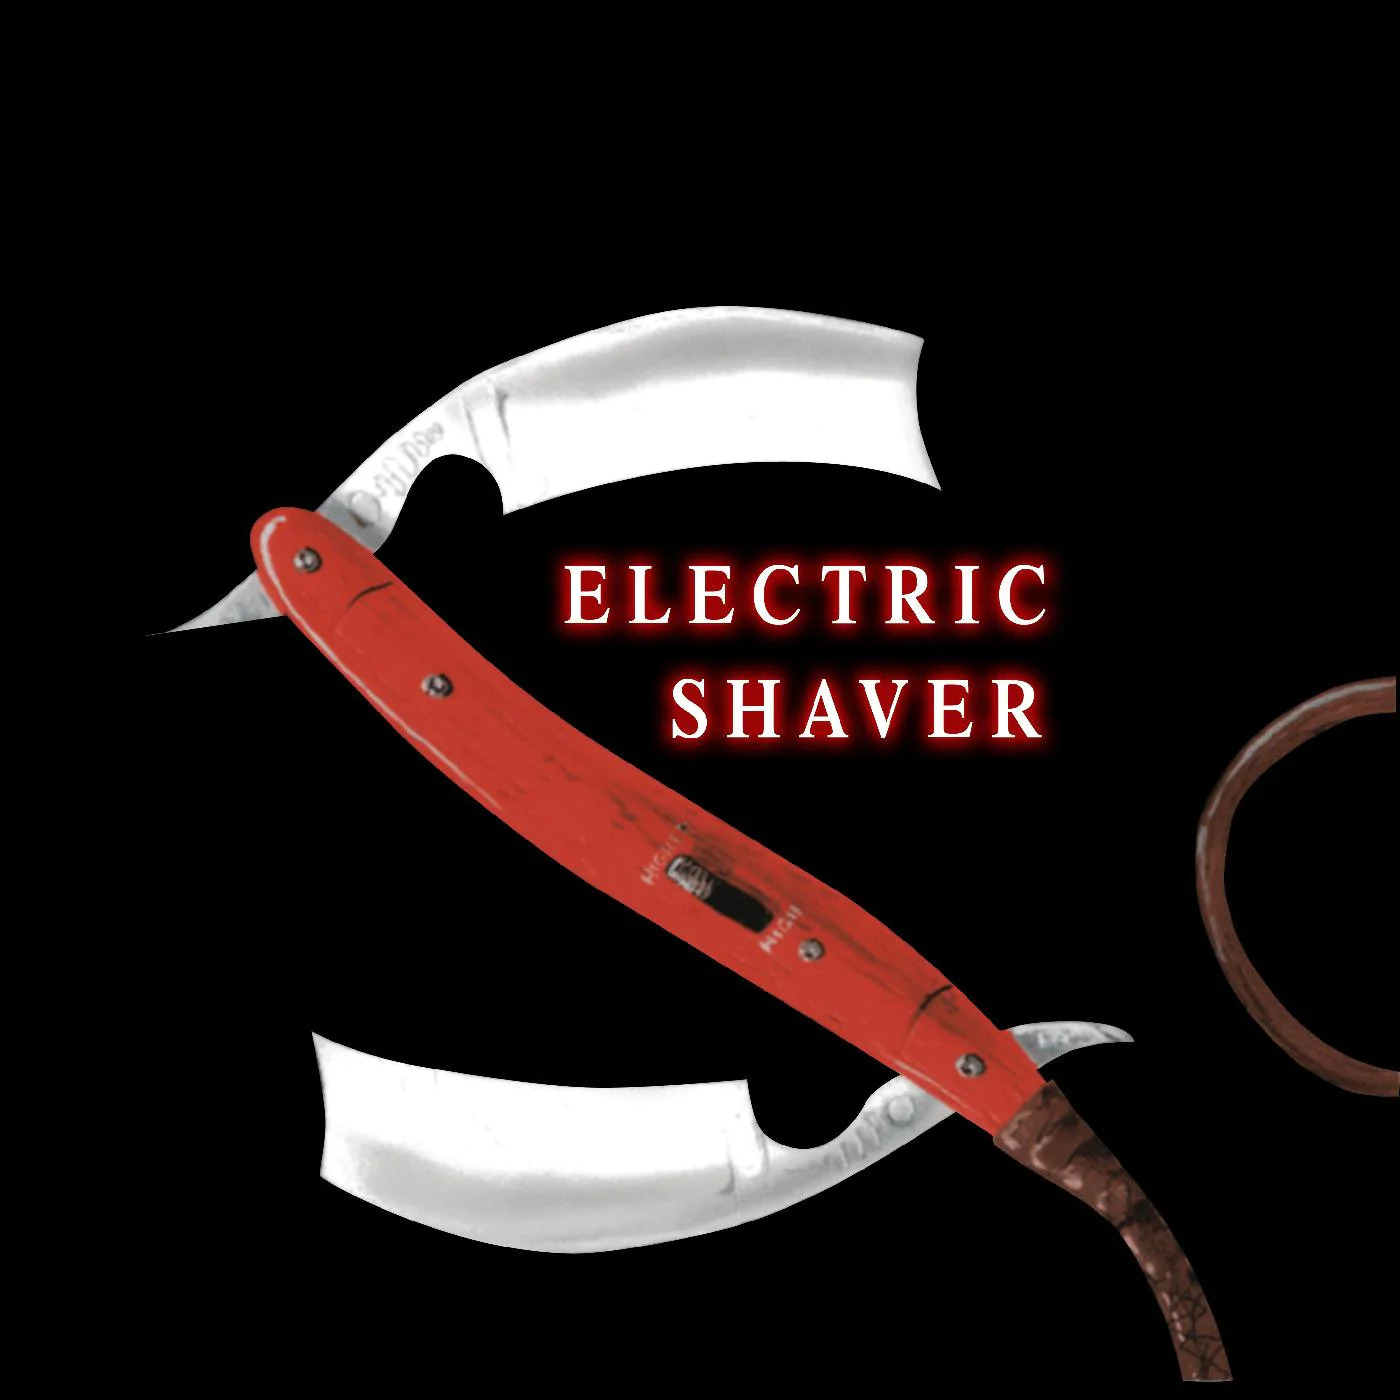 Shaver - Electric Shaver [Metallic Silver Vinyl] NEW Sealed Vinyl LP Album